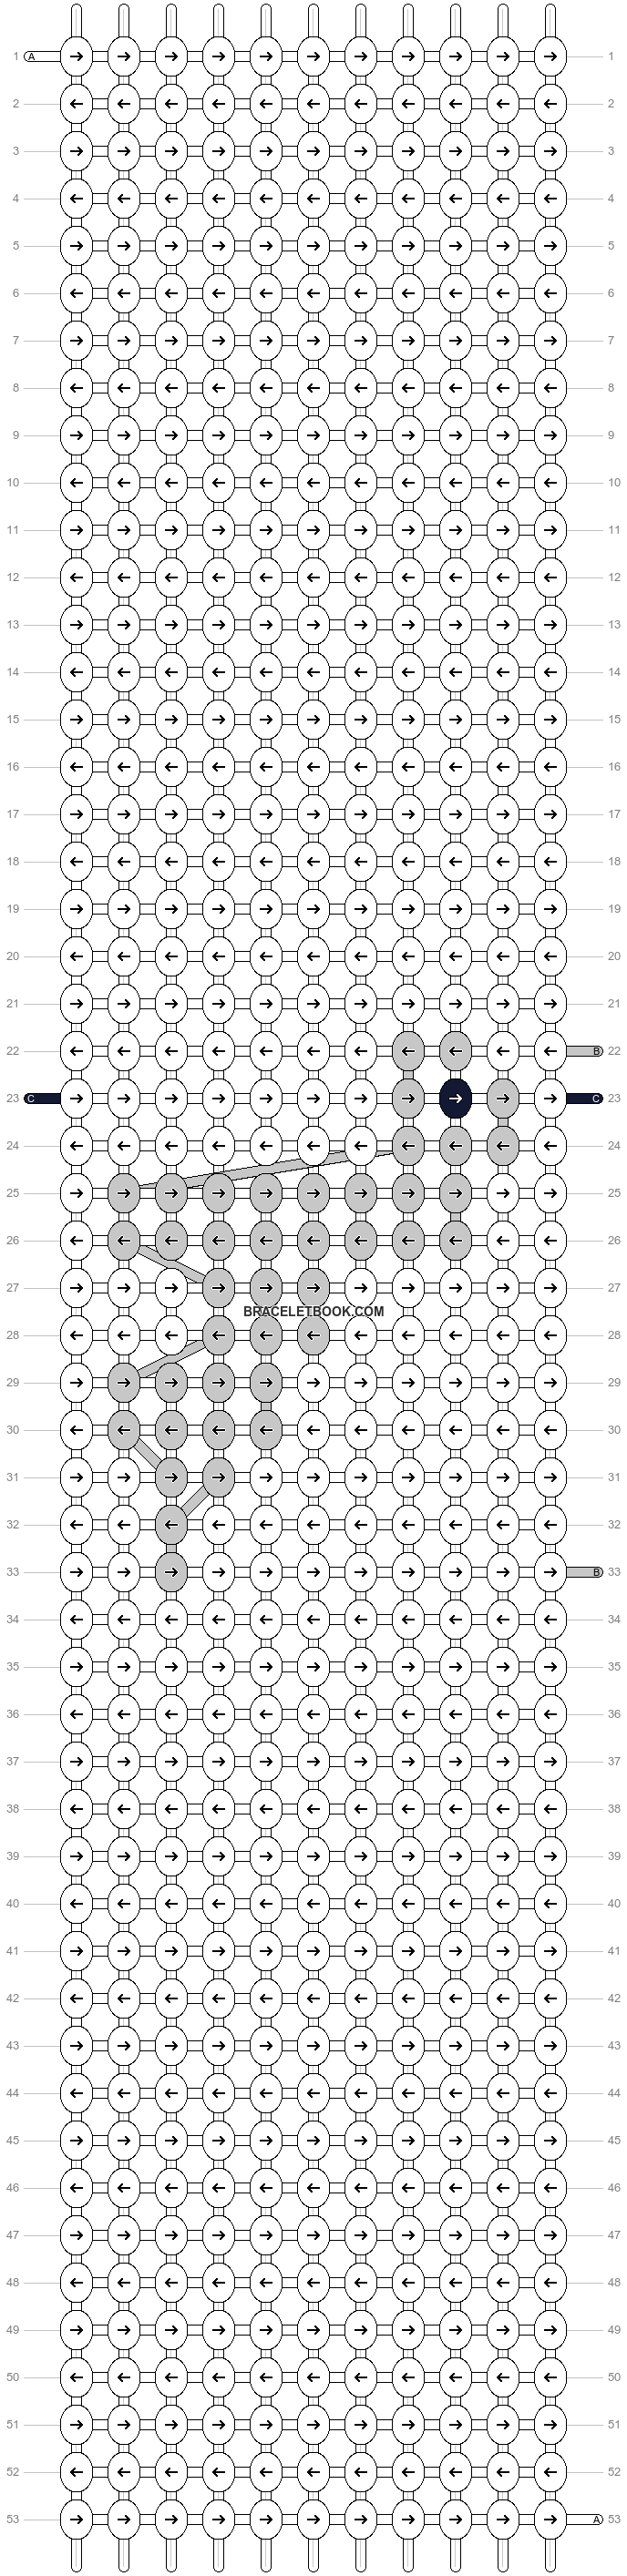 Alpha pattern #59132 variation #137516 pattern